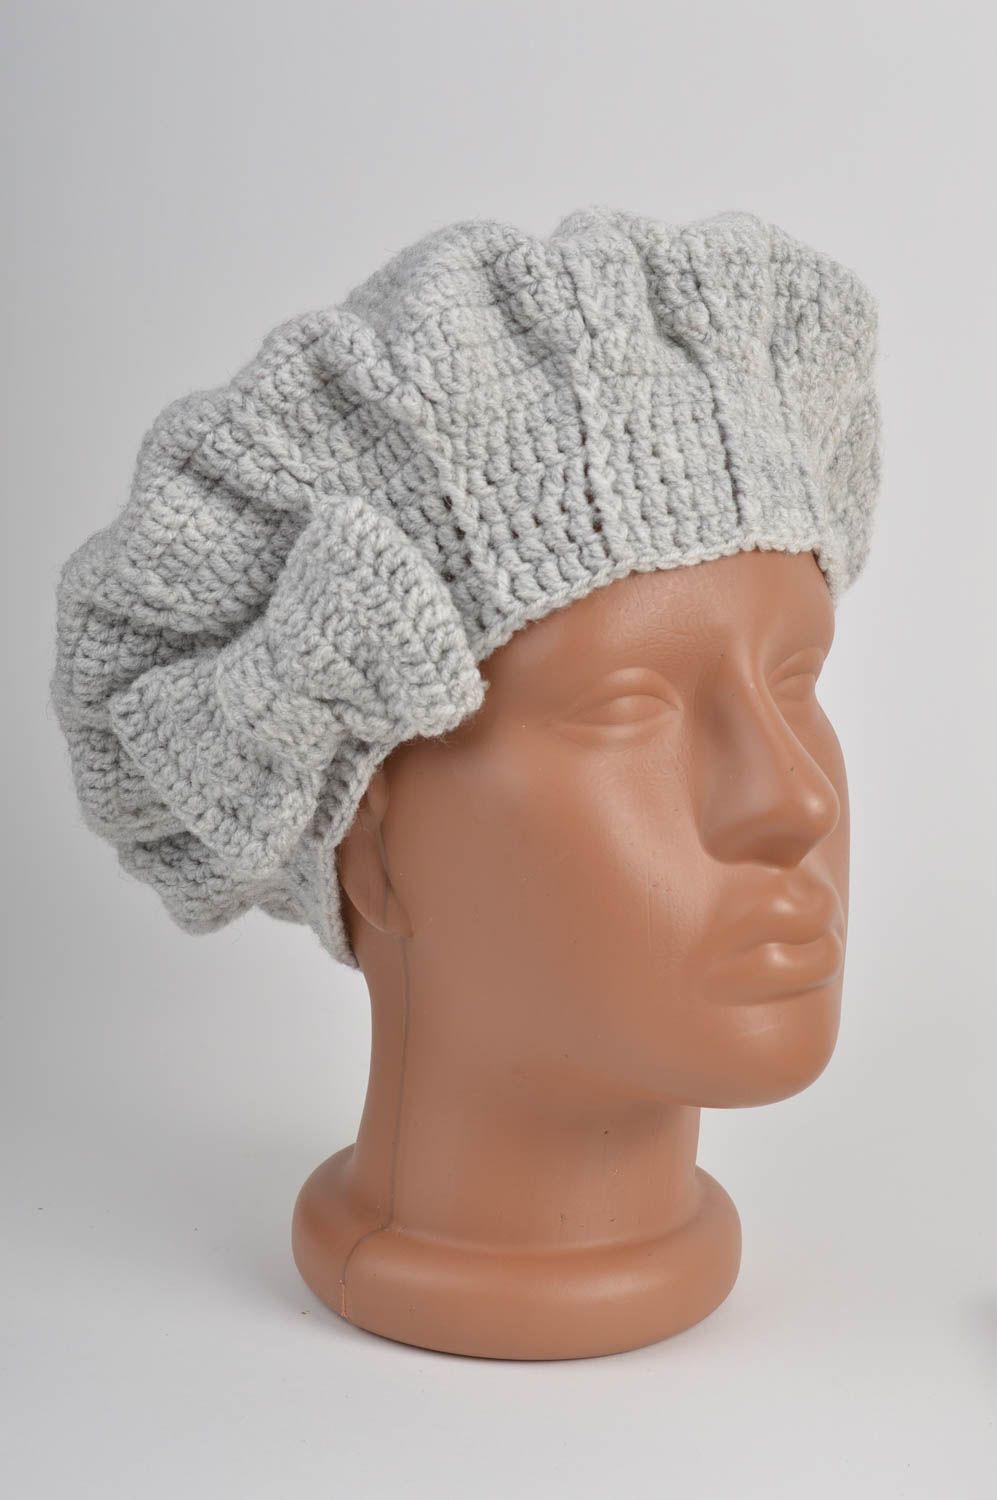 Handmade crochet beret ladies winter hats winter hats for women gifts for mom photo 2